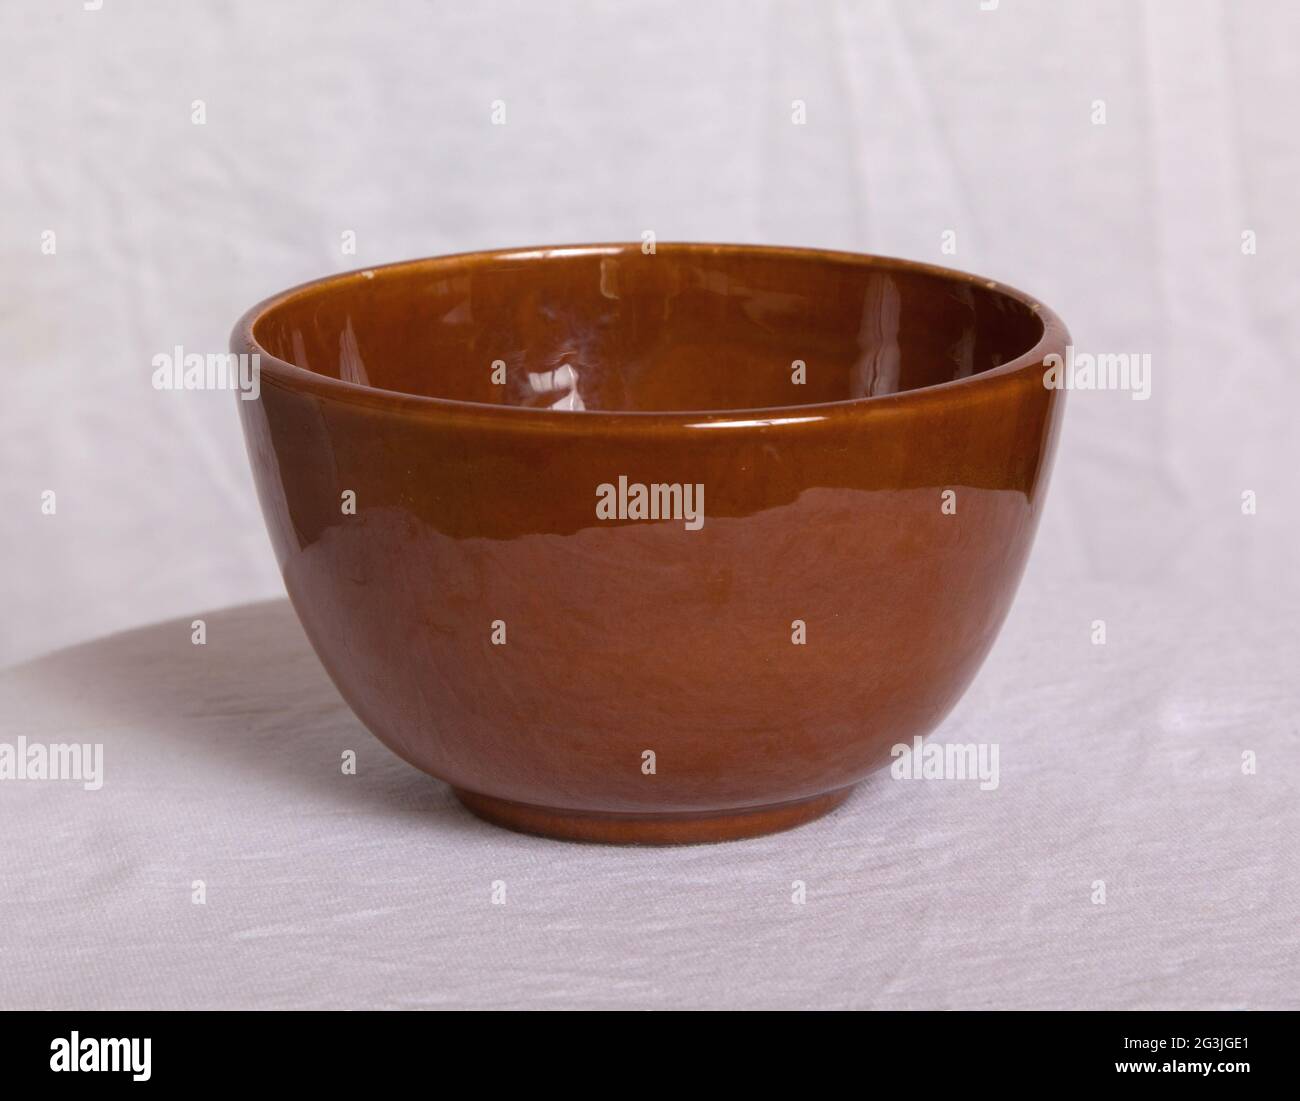 Vintage empty bowl Stock Photo